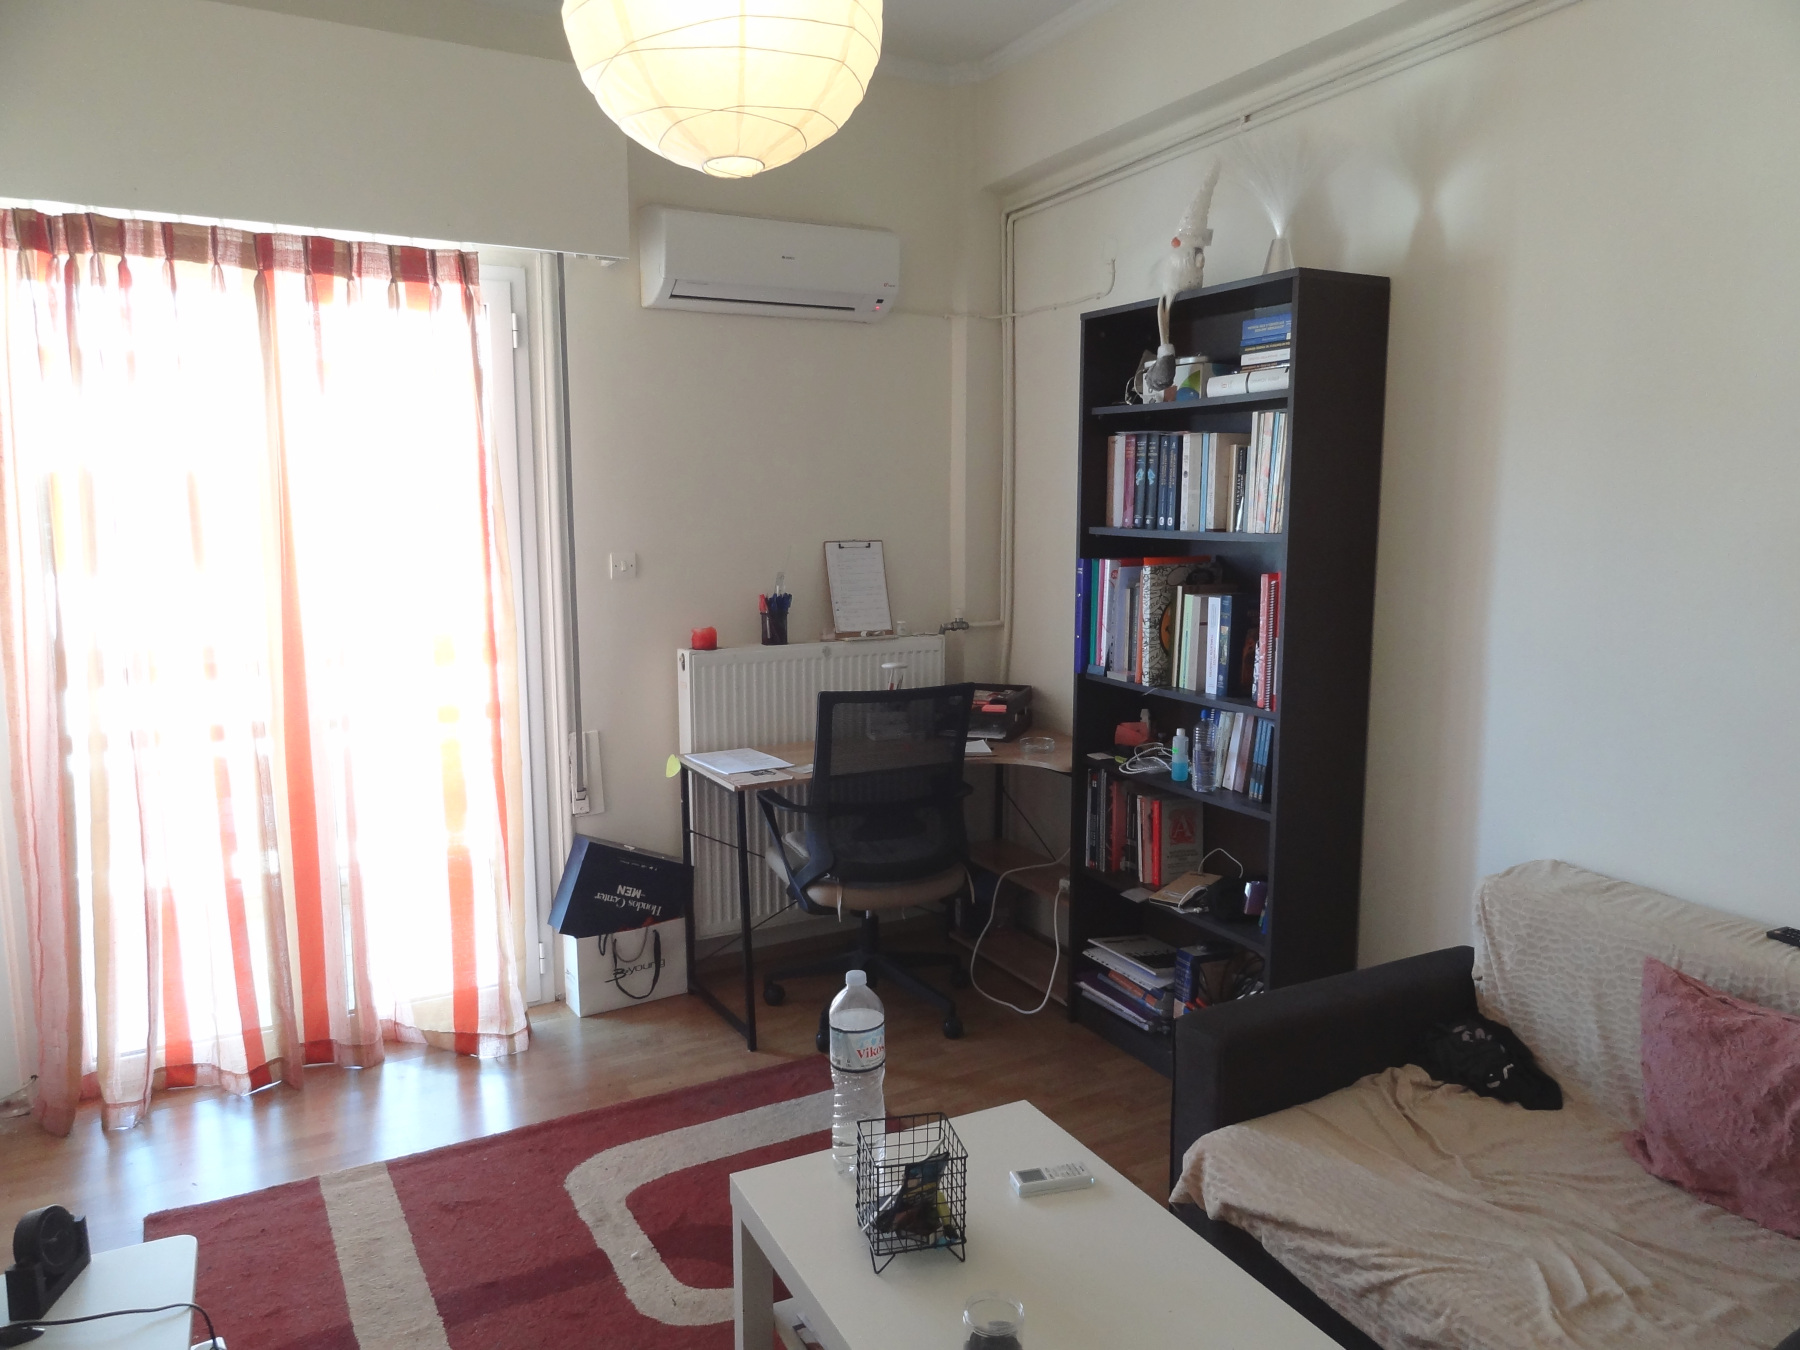 For sale 1 bedroom apartment 58 sq.m. 4th floor near Alsos in Ioannina